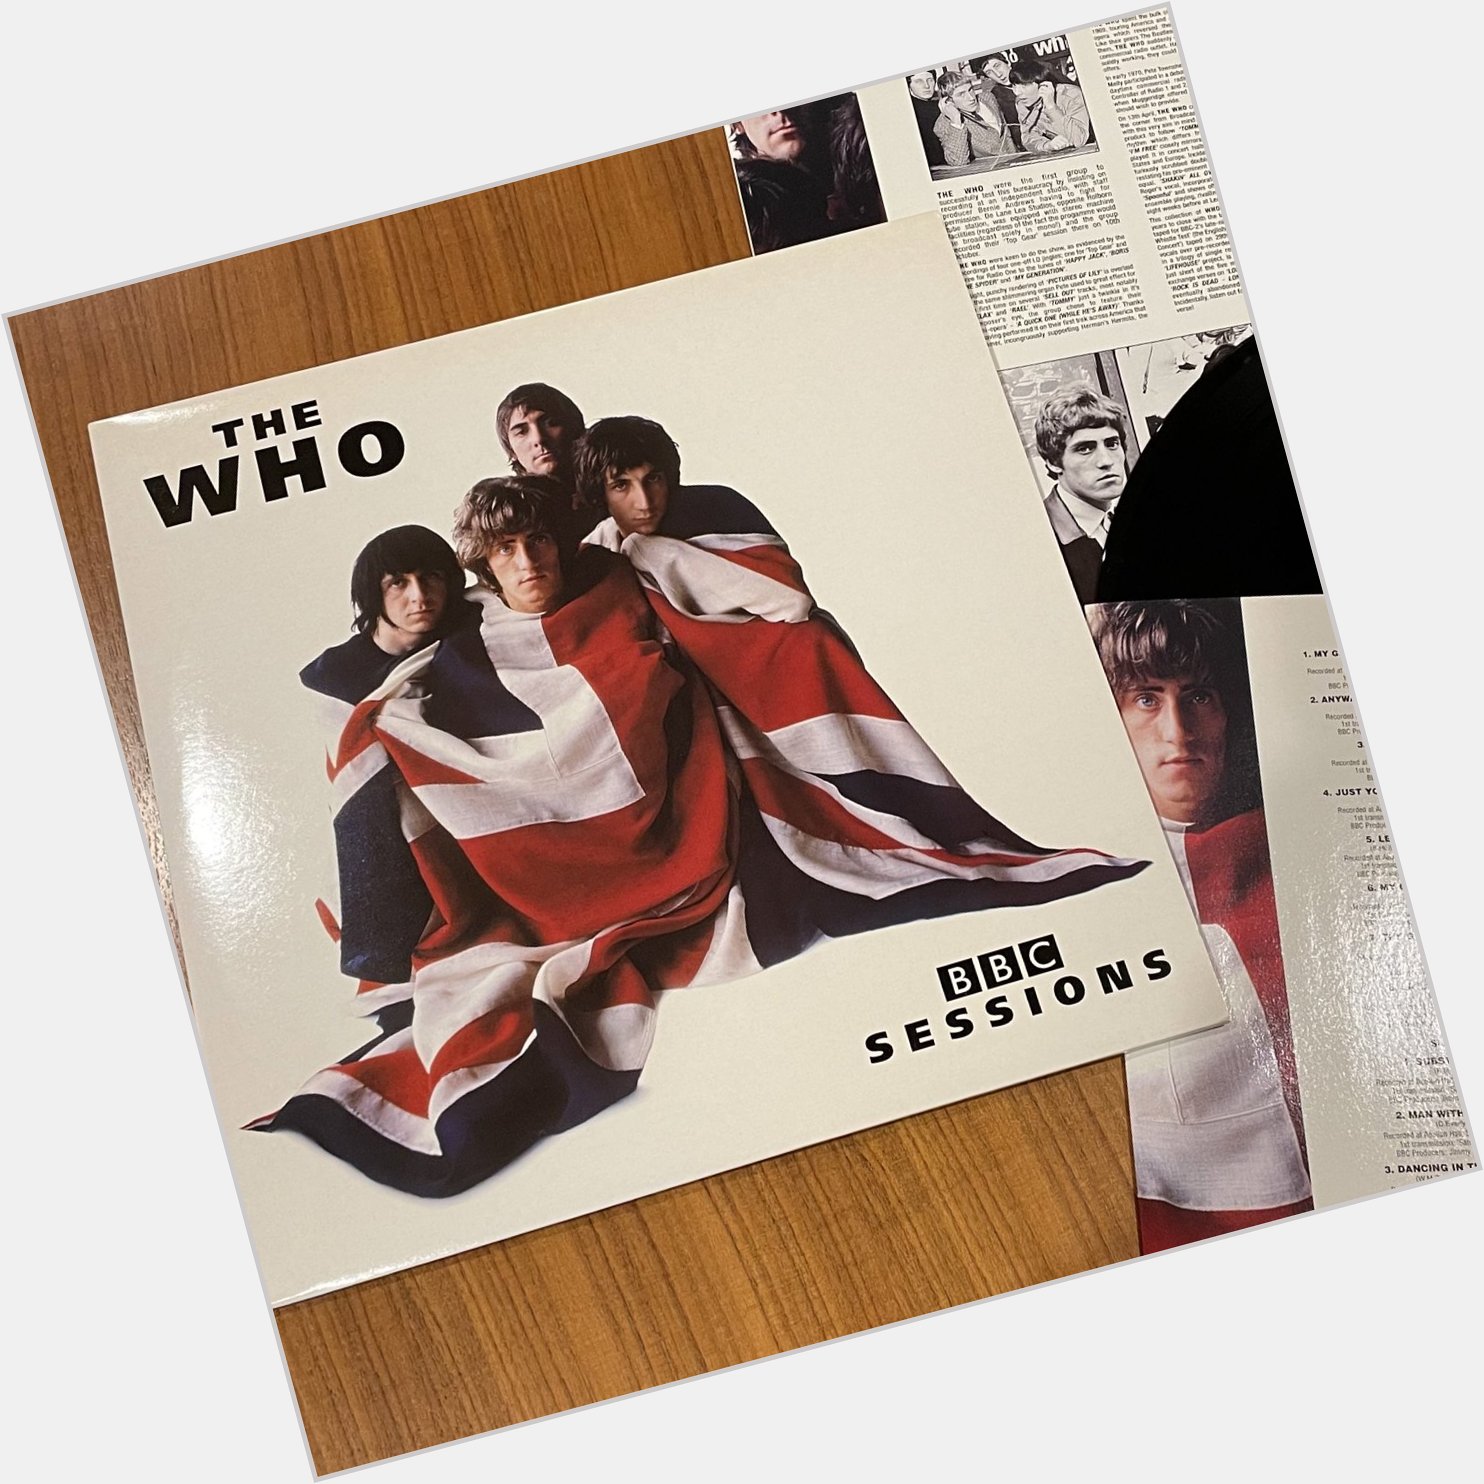    The Who BBC Sessions Polydor 547 727-1,EU.
Happy Birthday!
Roger Daltrey    